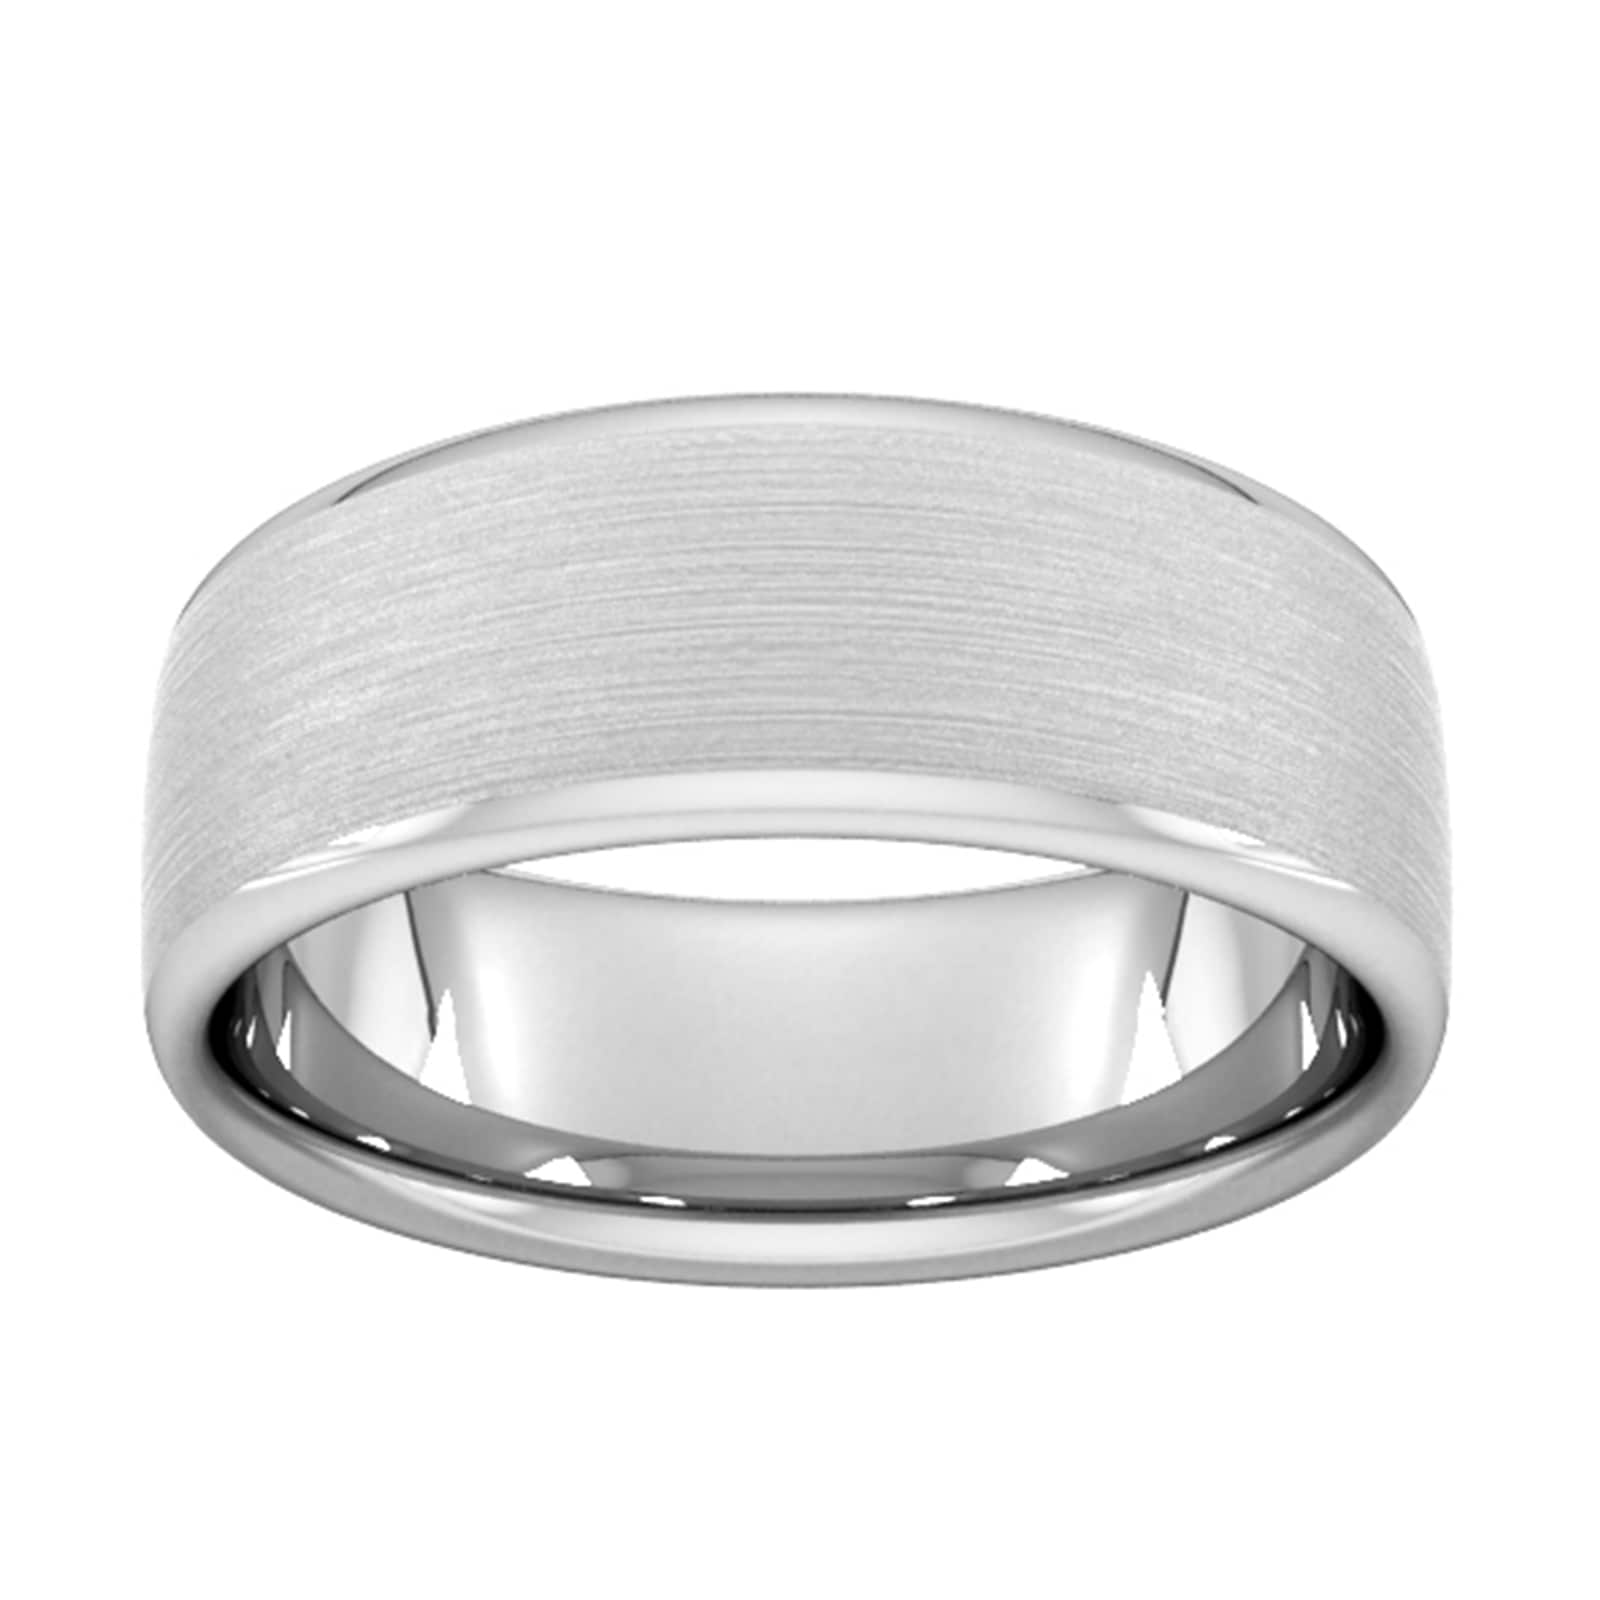 8mm D Shape Standard Matt Finished Wedding Ring In 9 Carat White Gold - Ring Size V